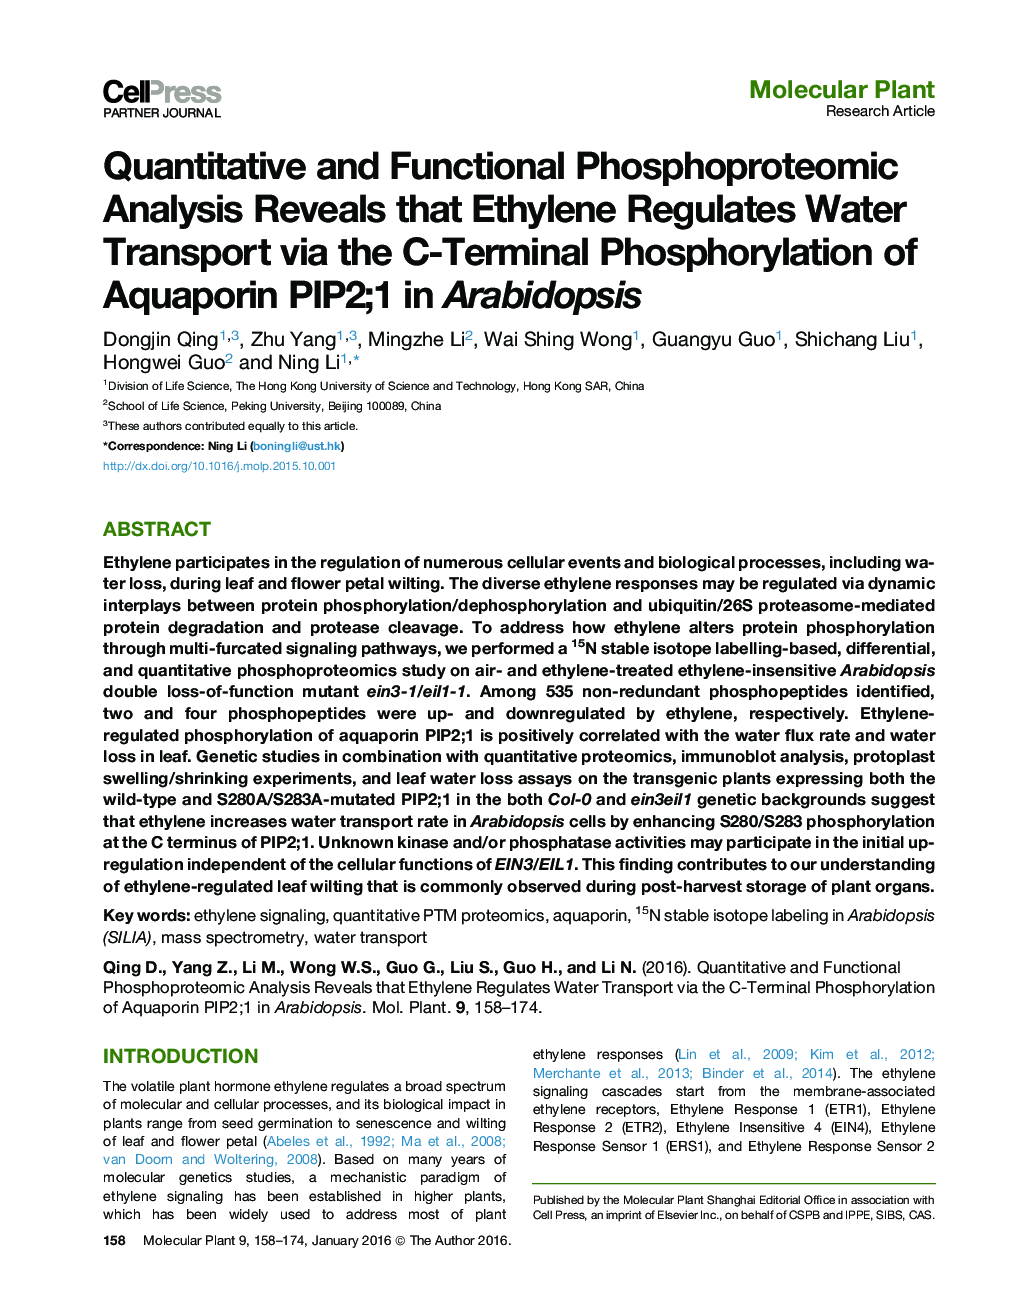 Quantitative and Functional Phosphoproteomic Analysis Reveals that Ethylene Regulates Water Transport via the C-Terminal Phosphorylation of Aquaporin PIP2;1 in Arabidopsis 